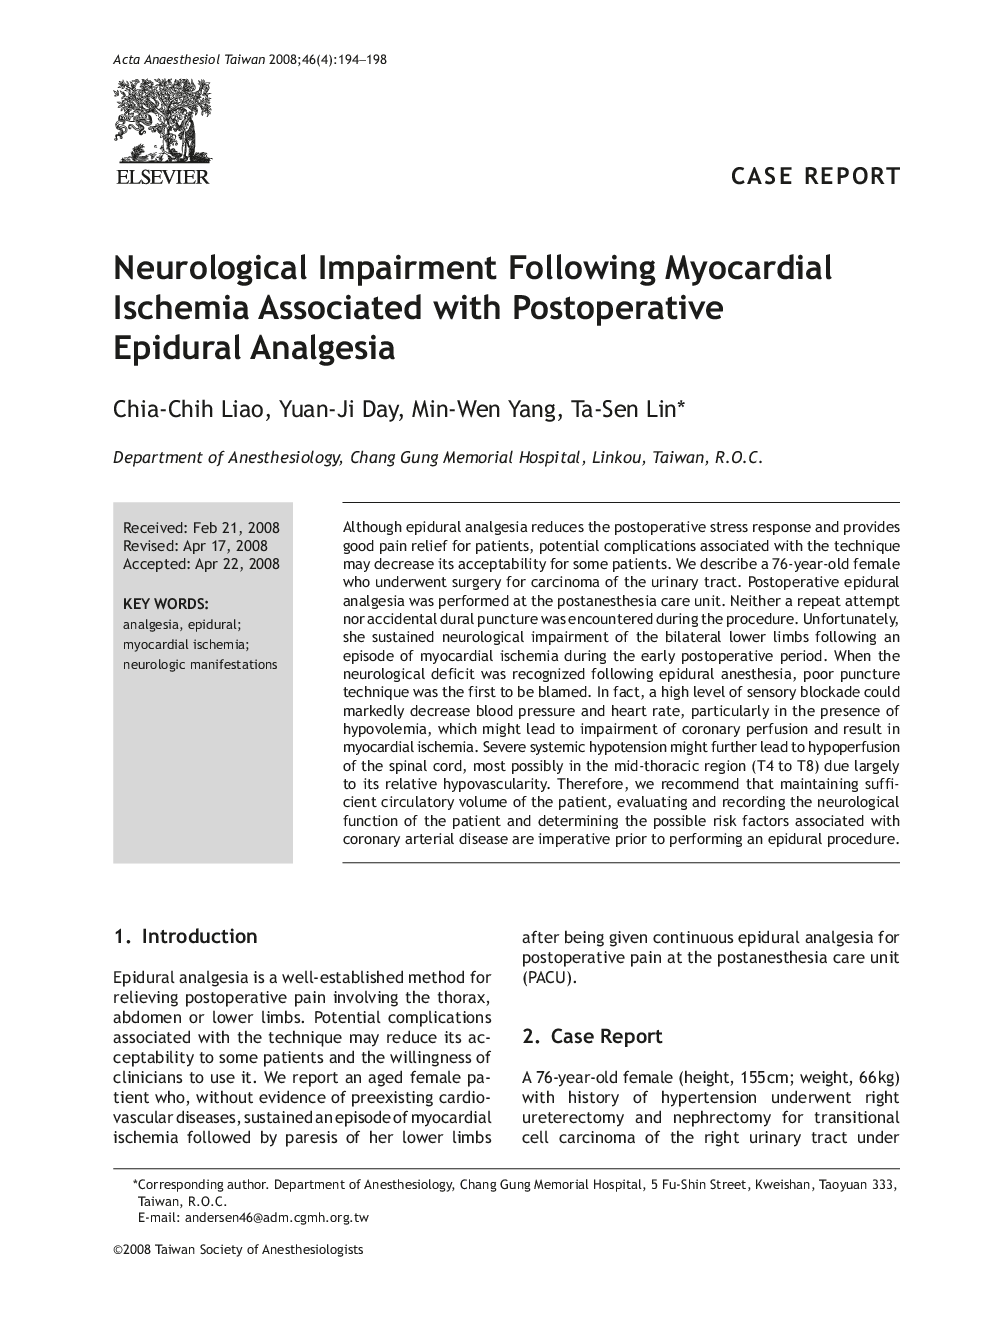 Neurological Impairment Following Myocardial Ischemia Associated with Postoperative Epidural Analgesia